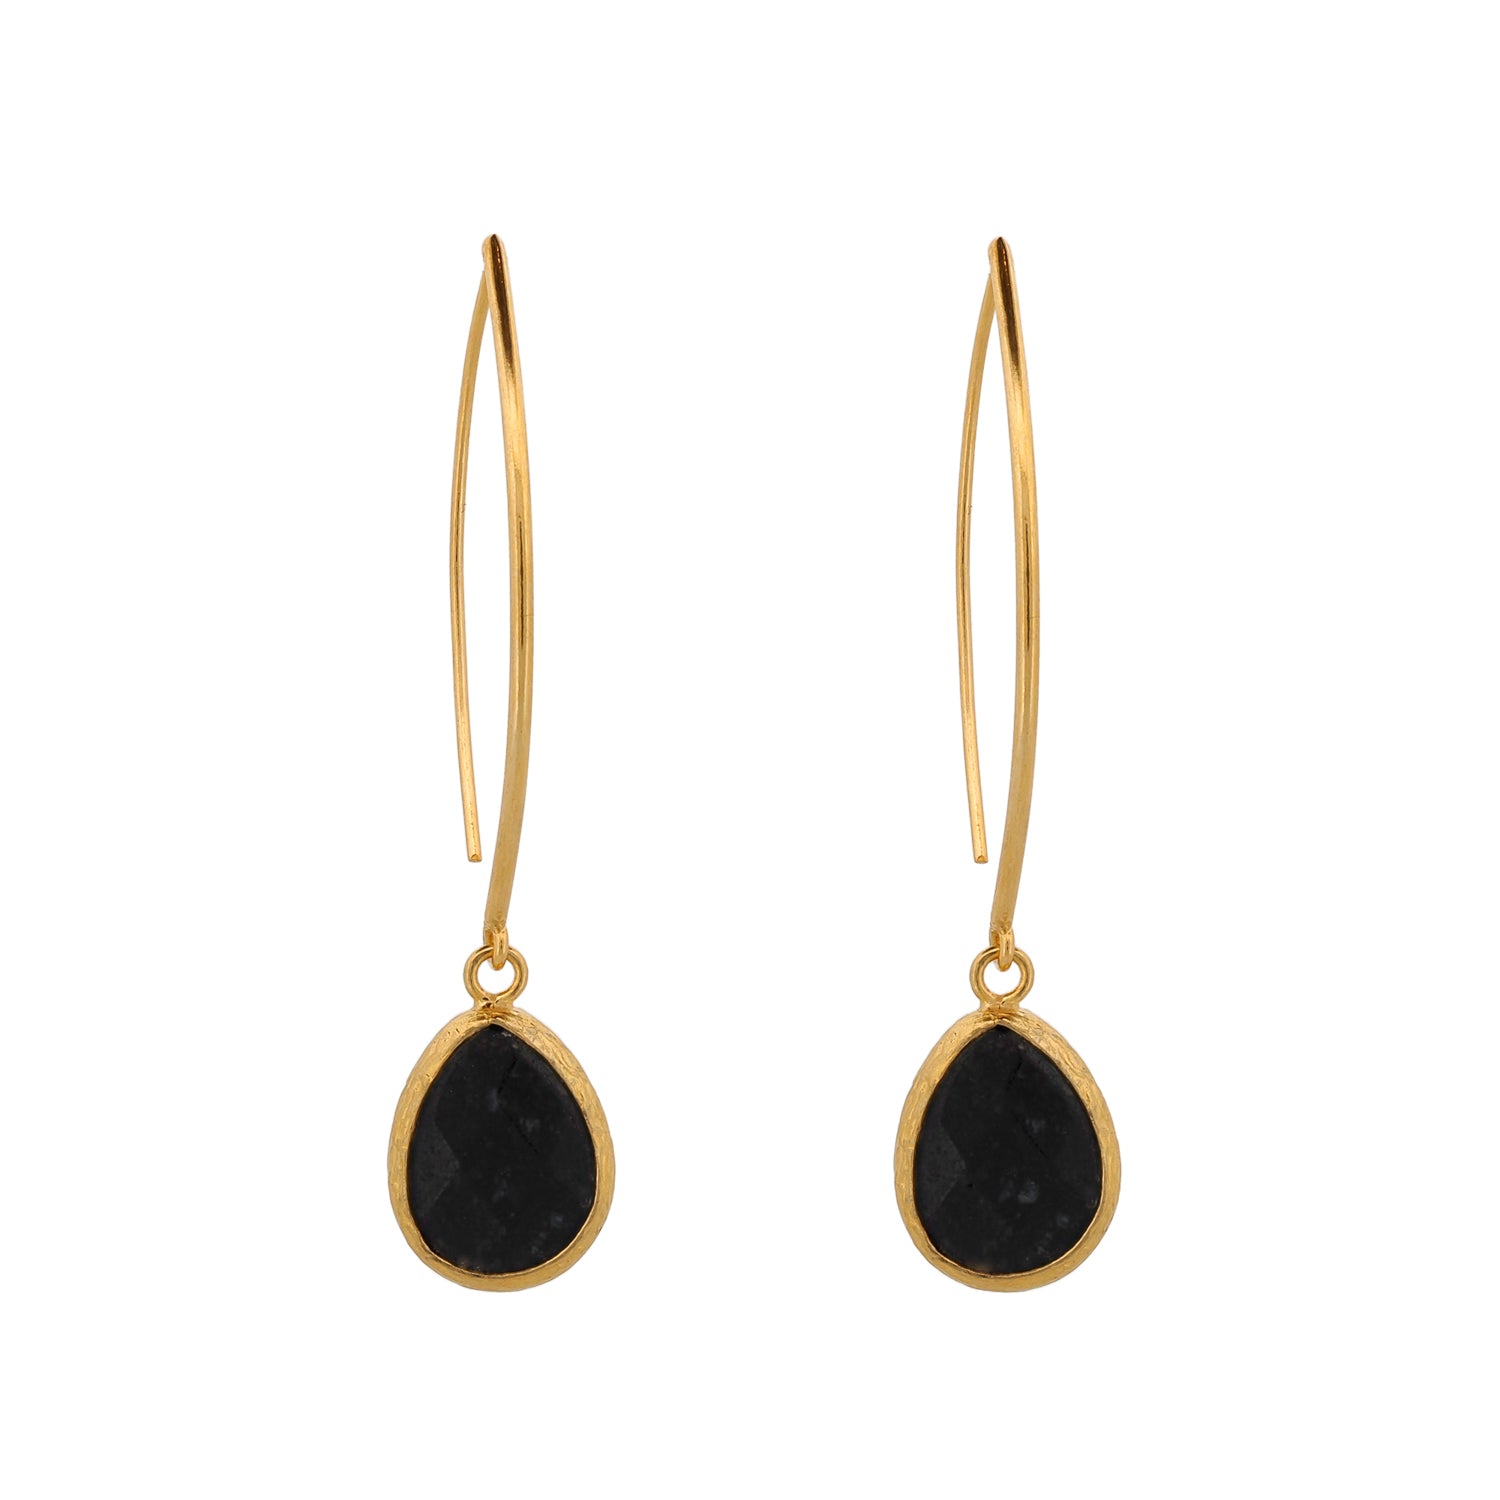 Elegant Black Onyx Dangle Earrings with 18K Gold Plating